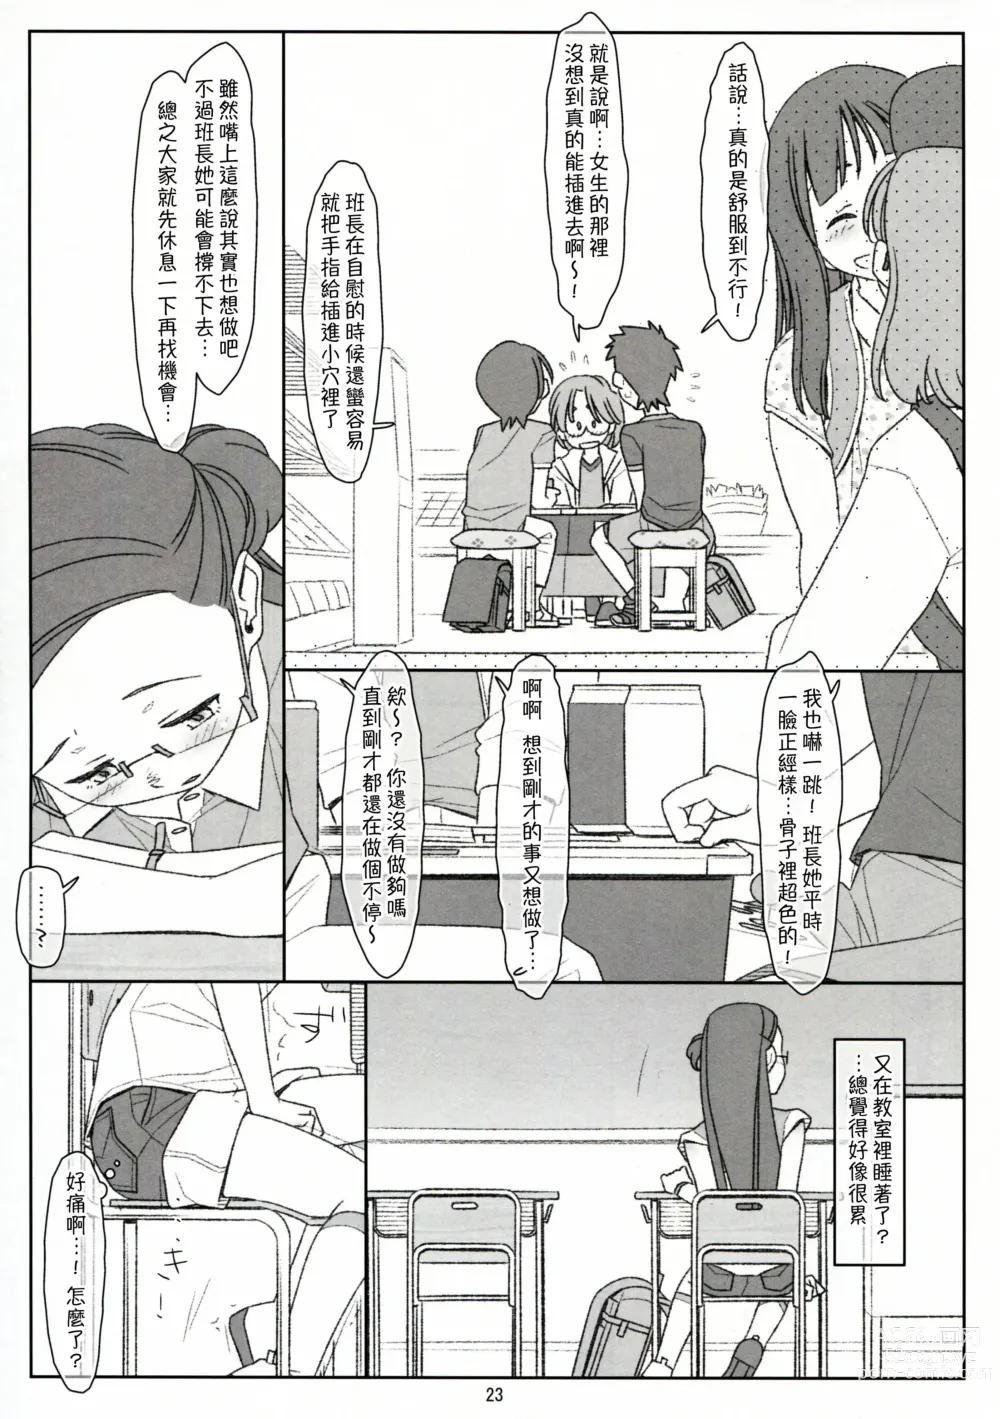 Page 49 of doujinshi Bokutachi no Super App + ②